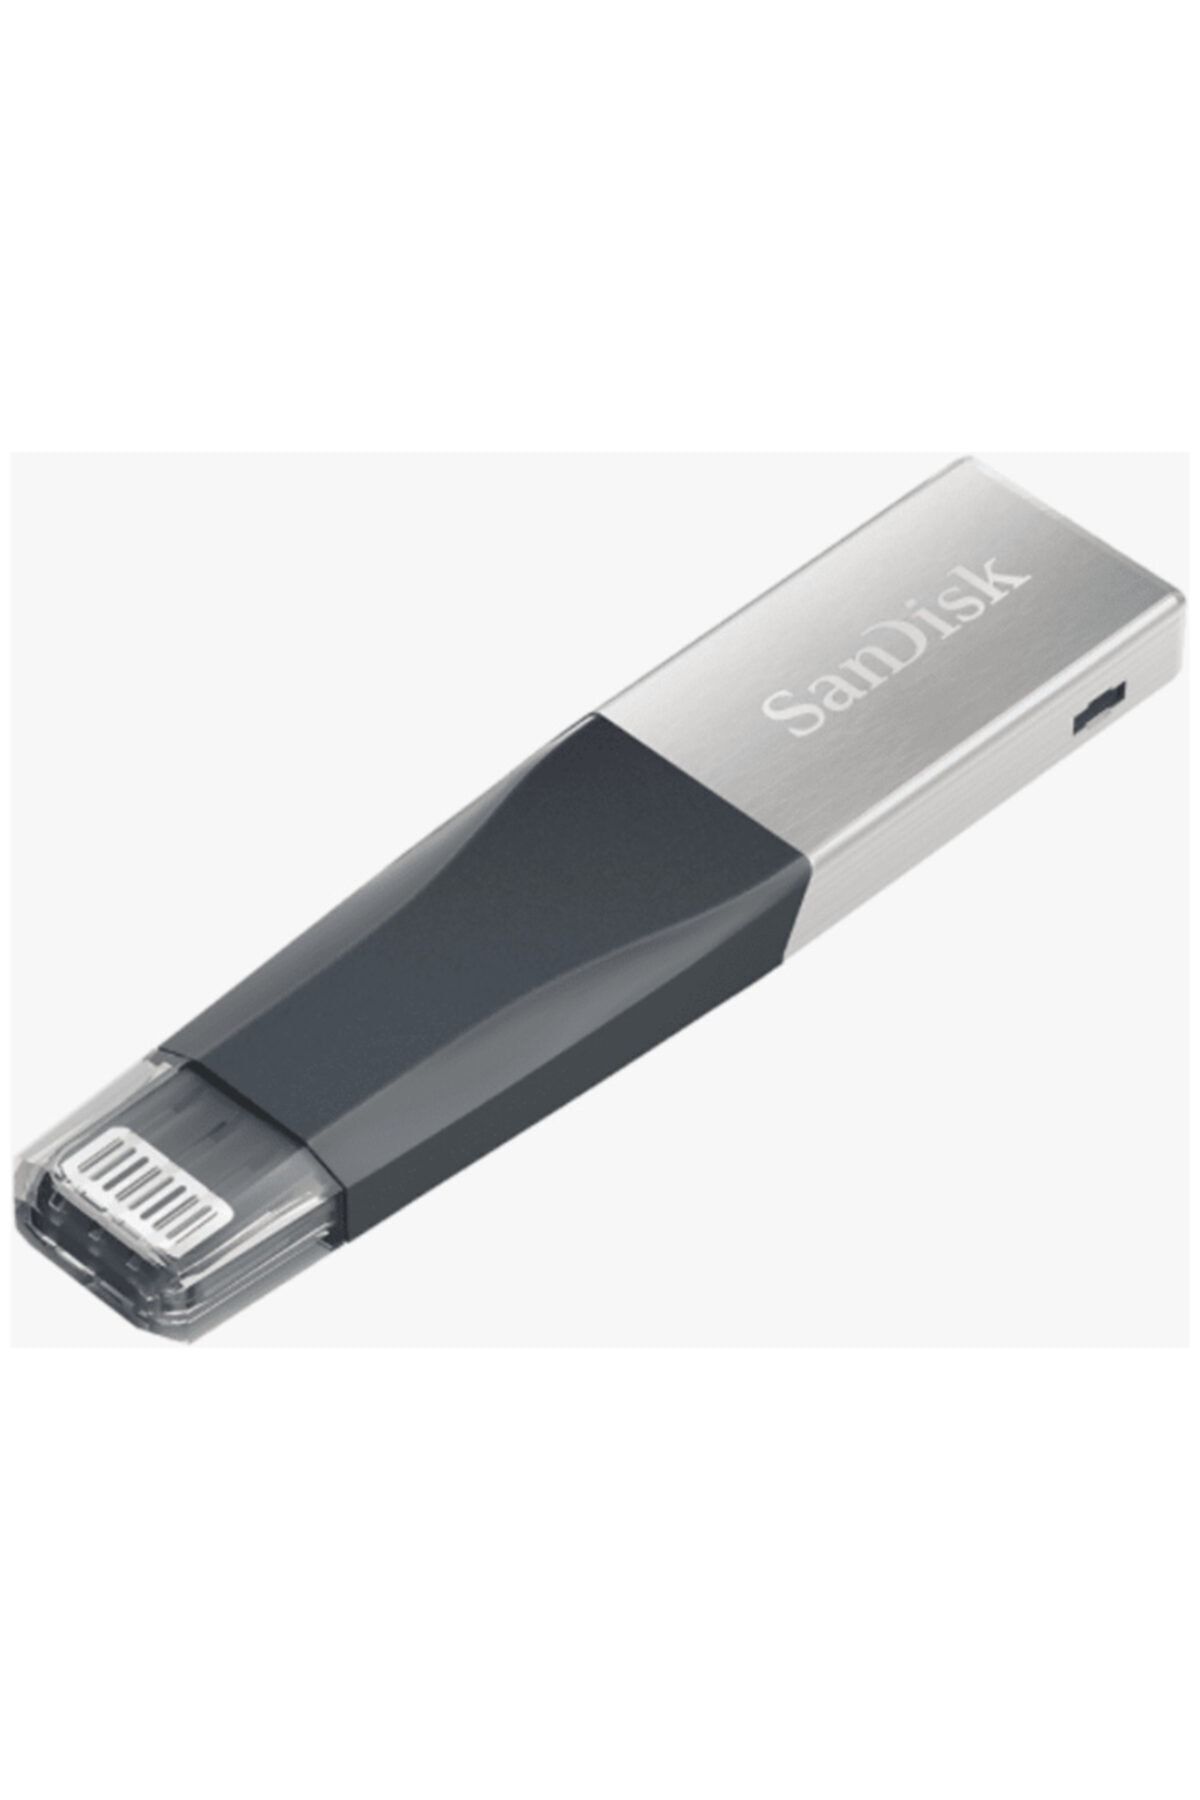 Sandisk iXpand Mini 256gb iPhone USB Bellek SDIX40N-256G-GN6NE